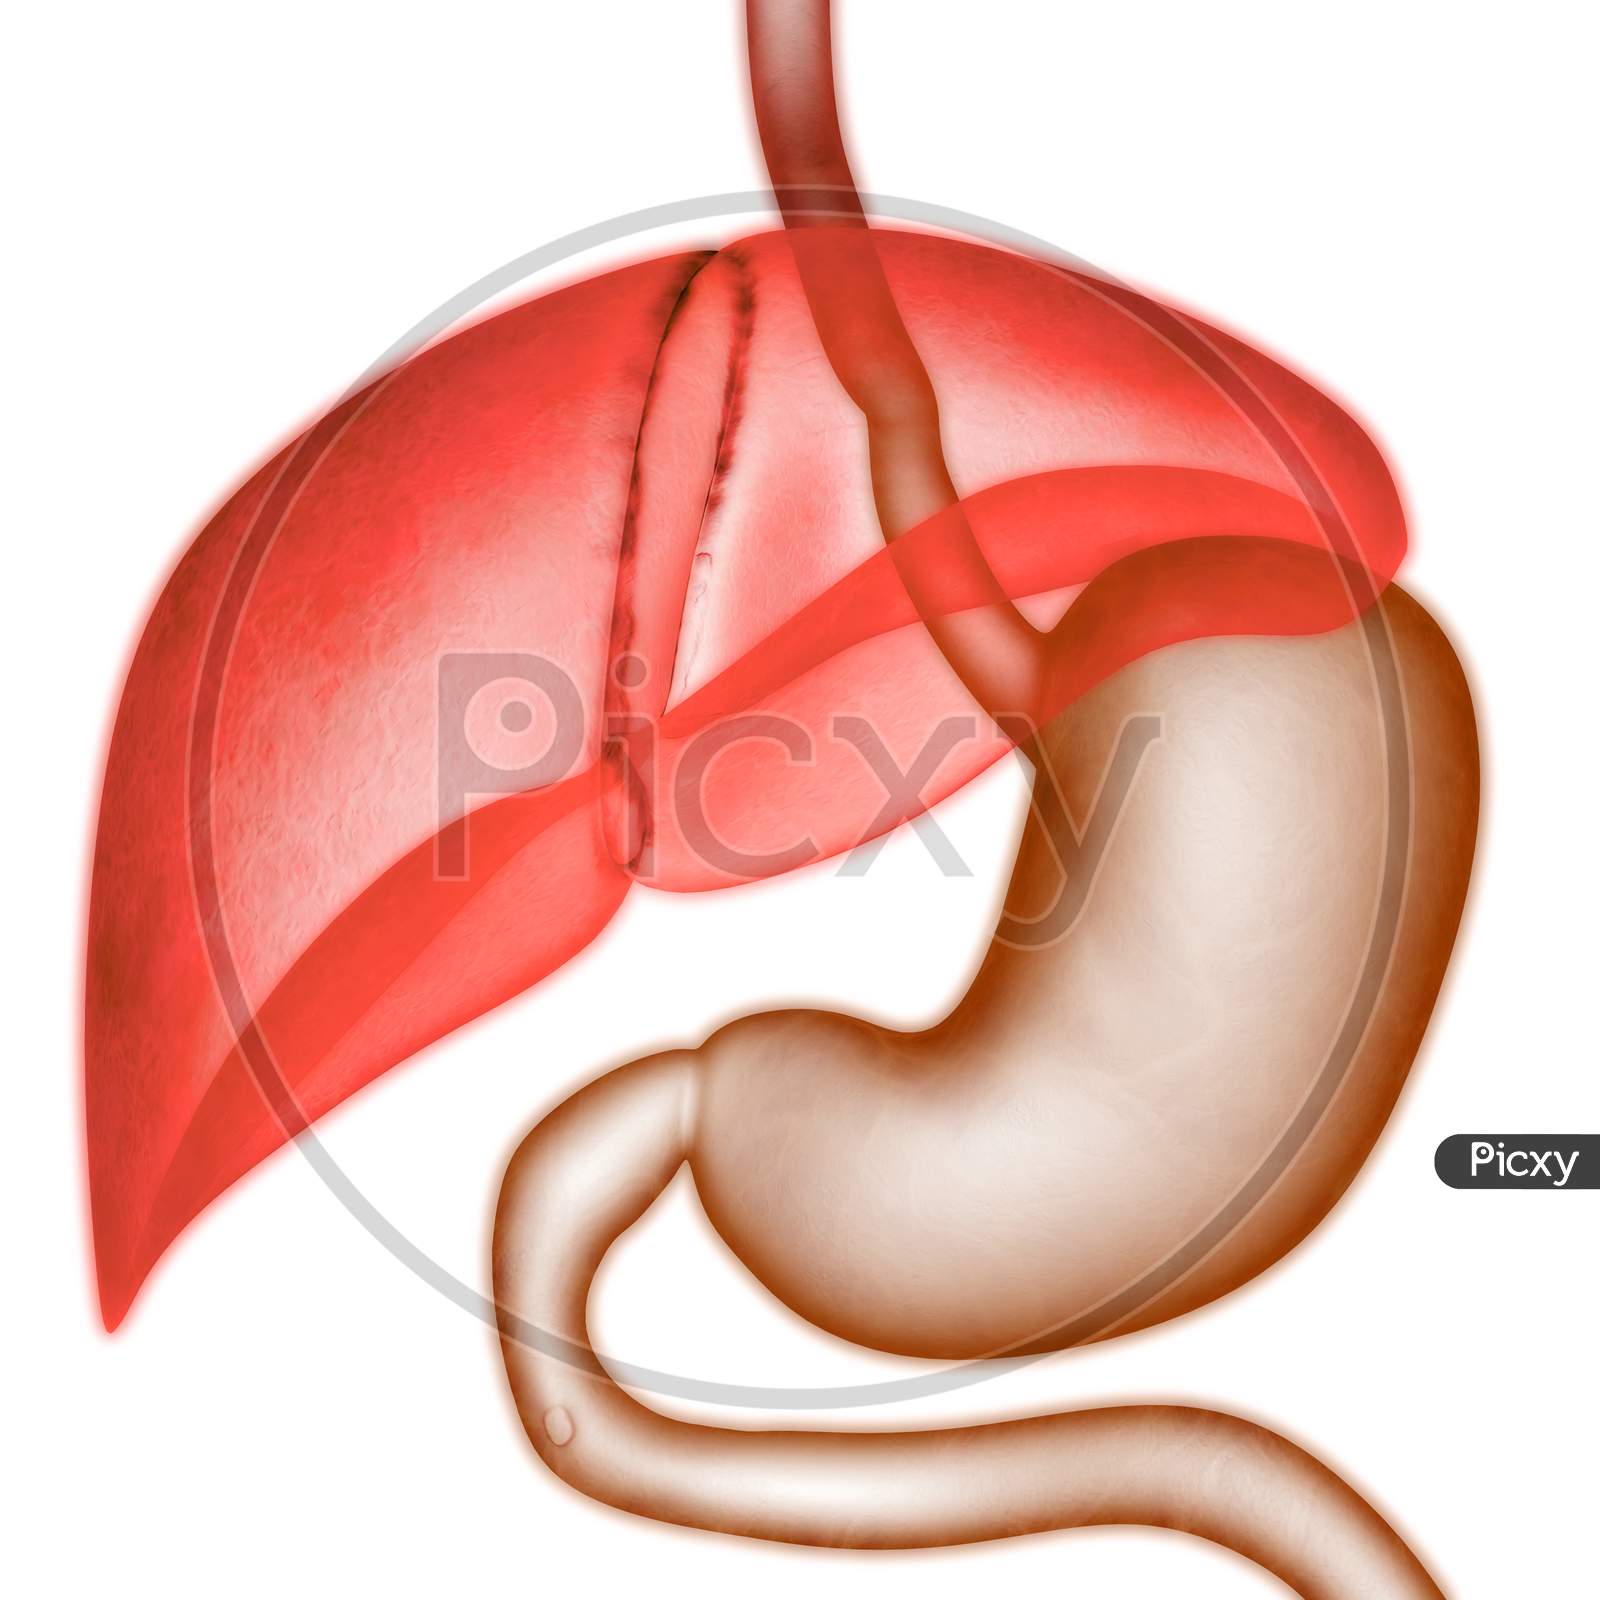 Human Internal Digestive Organ Liver with Stomach Anatomy